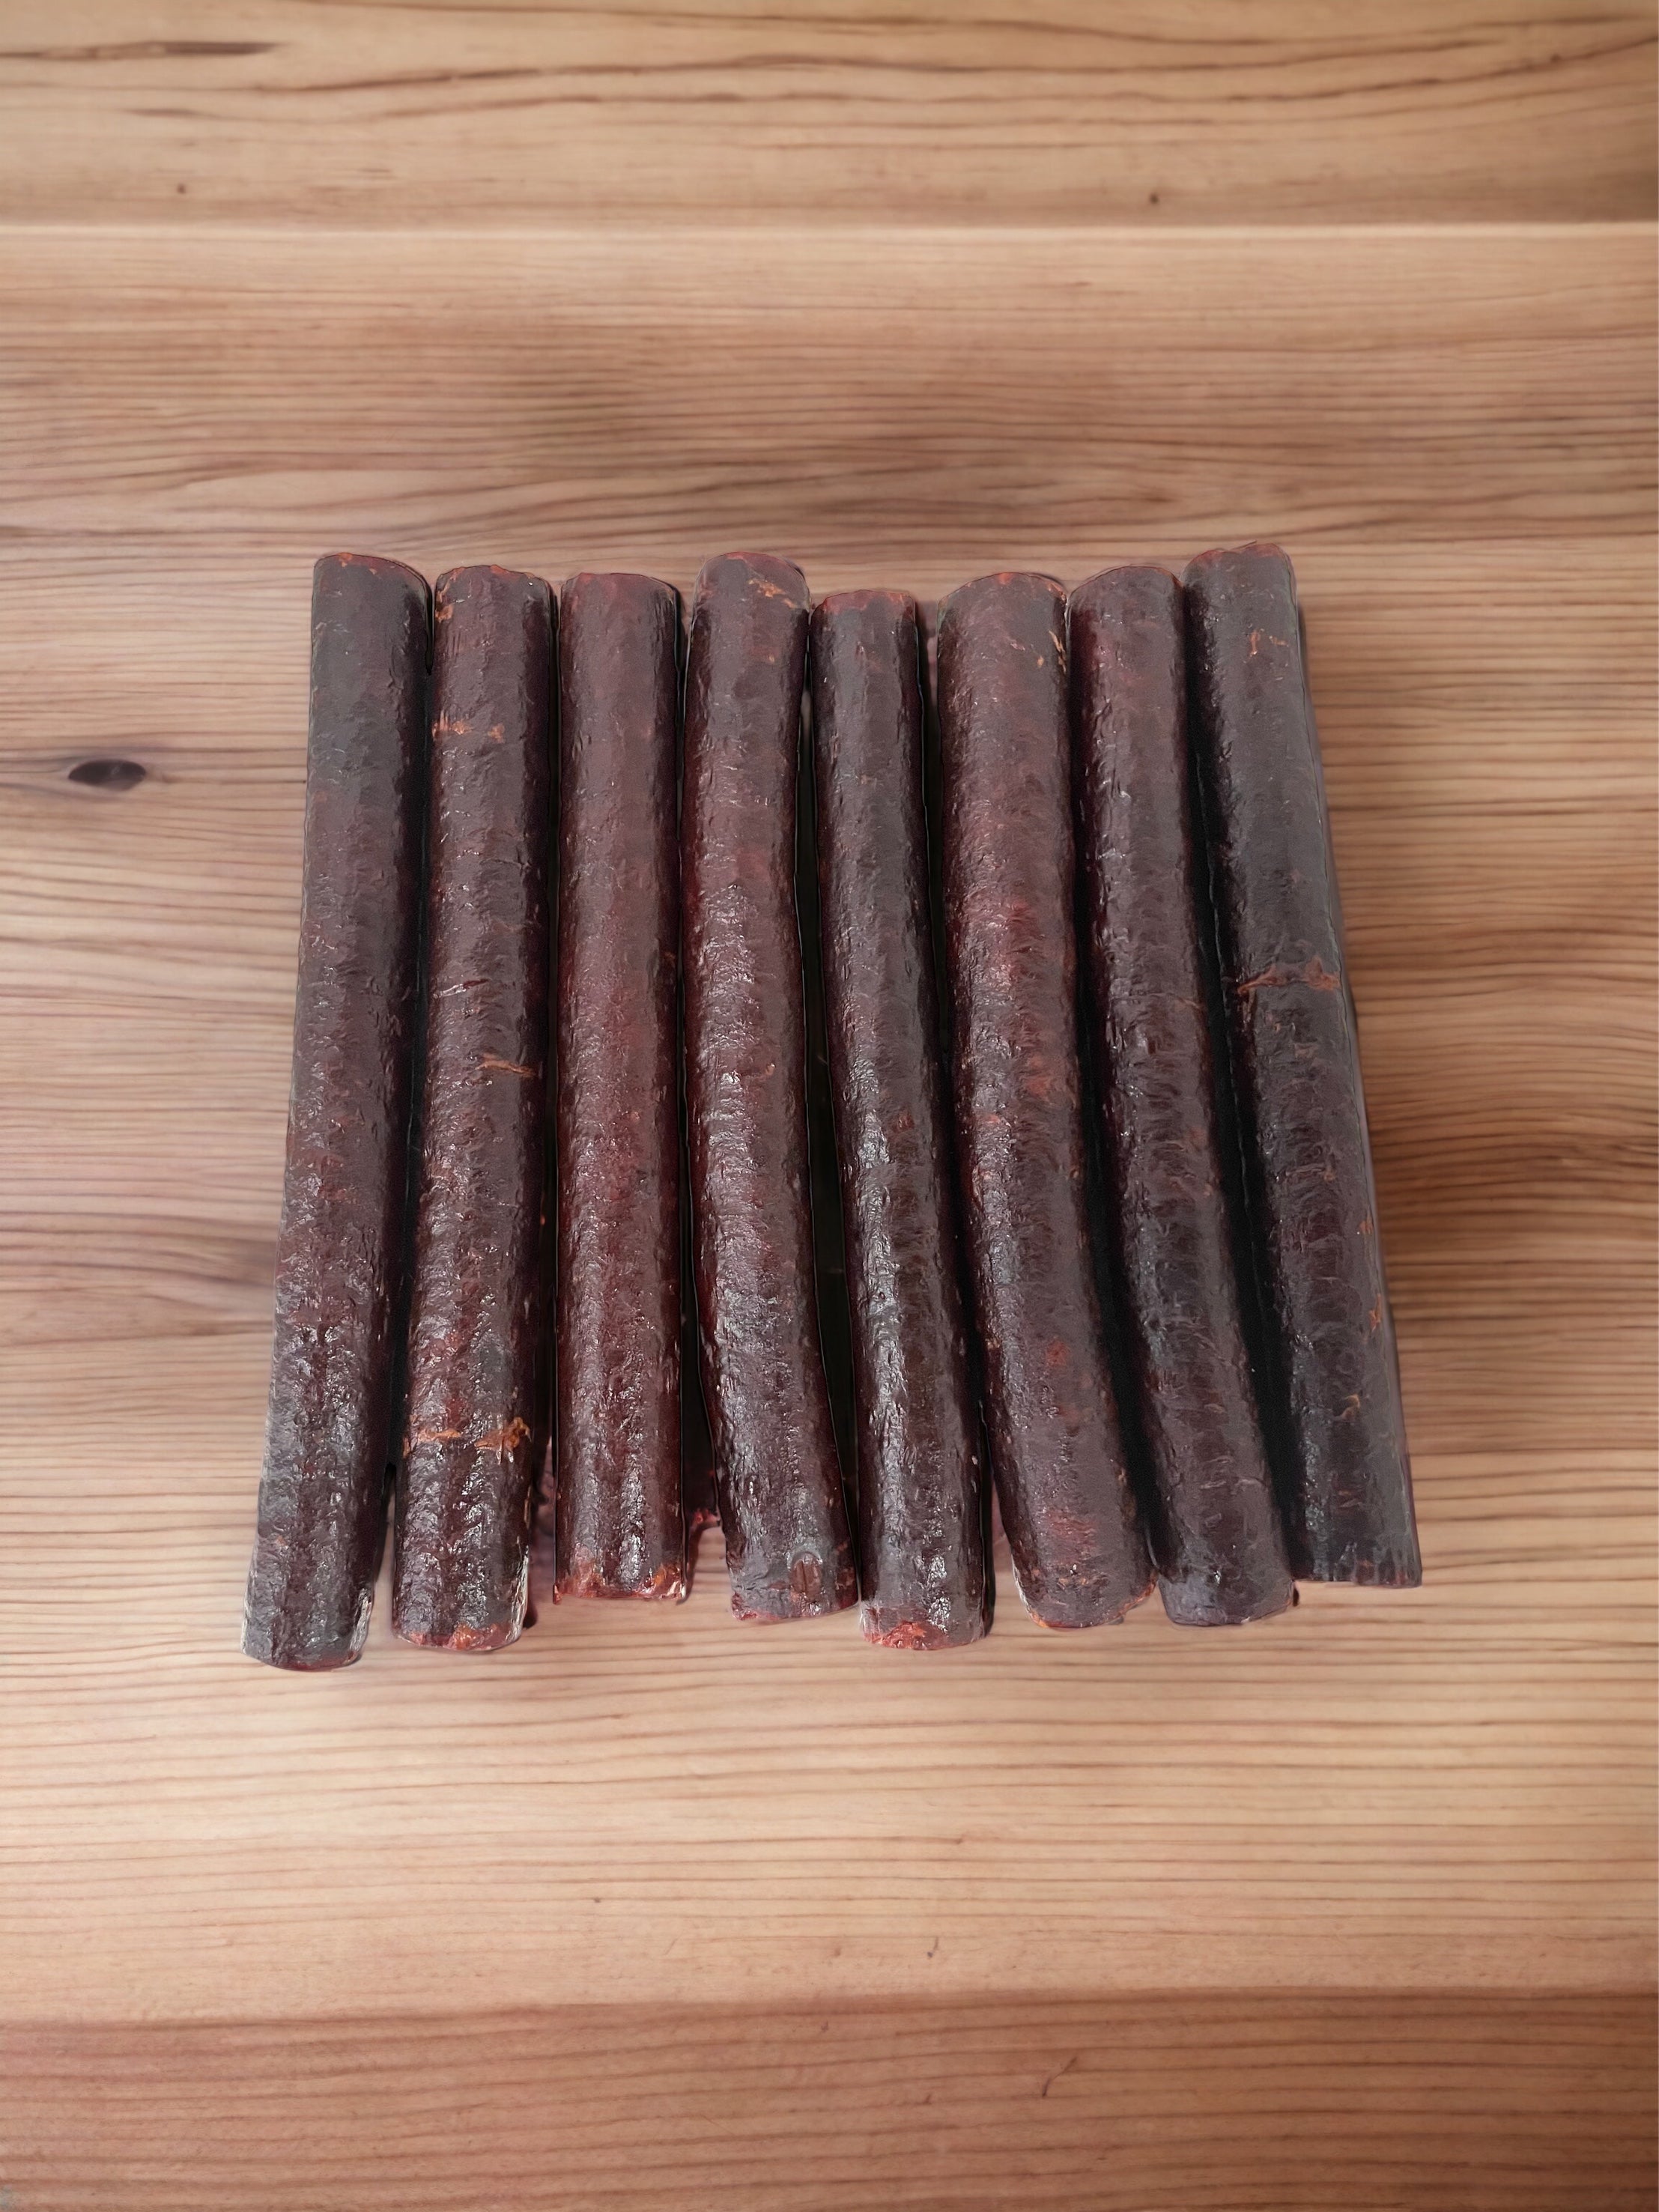 5” Beef Sticks (50 pack)